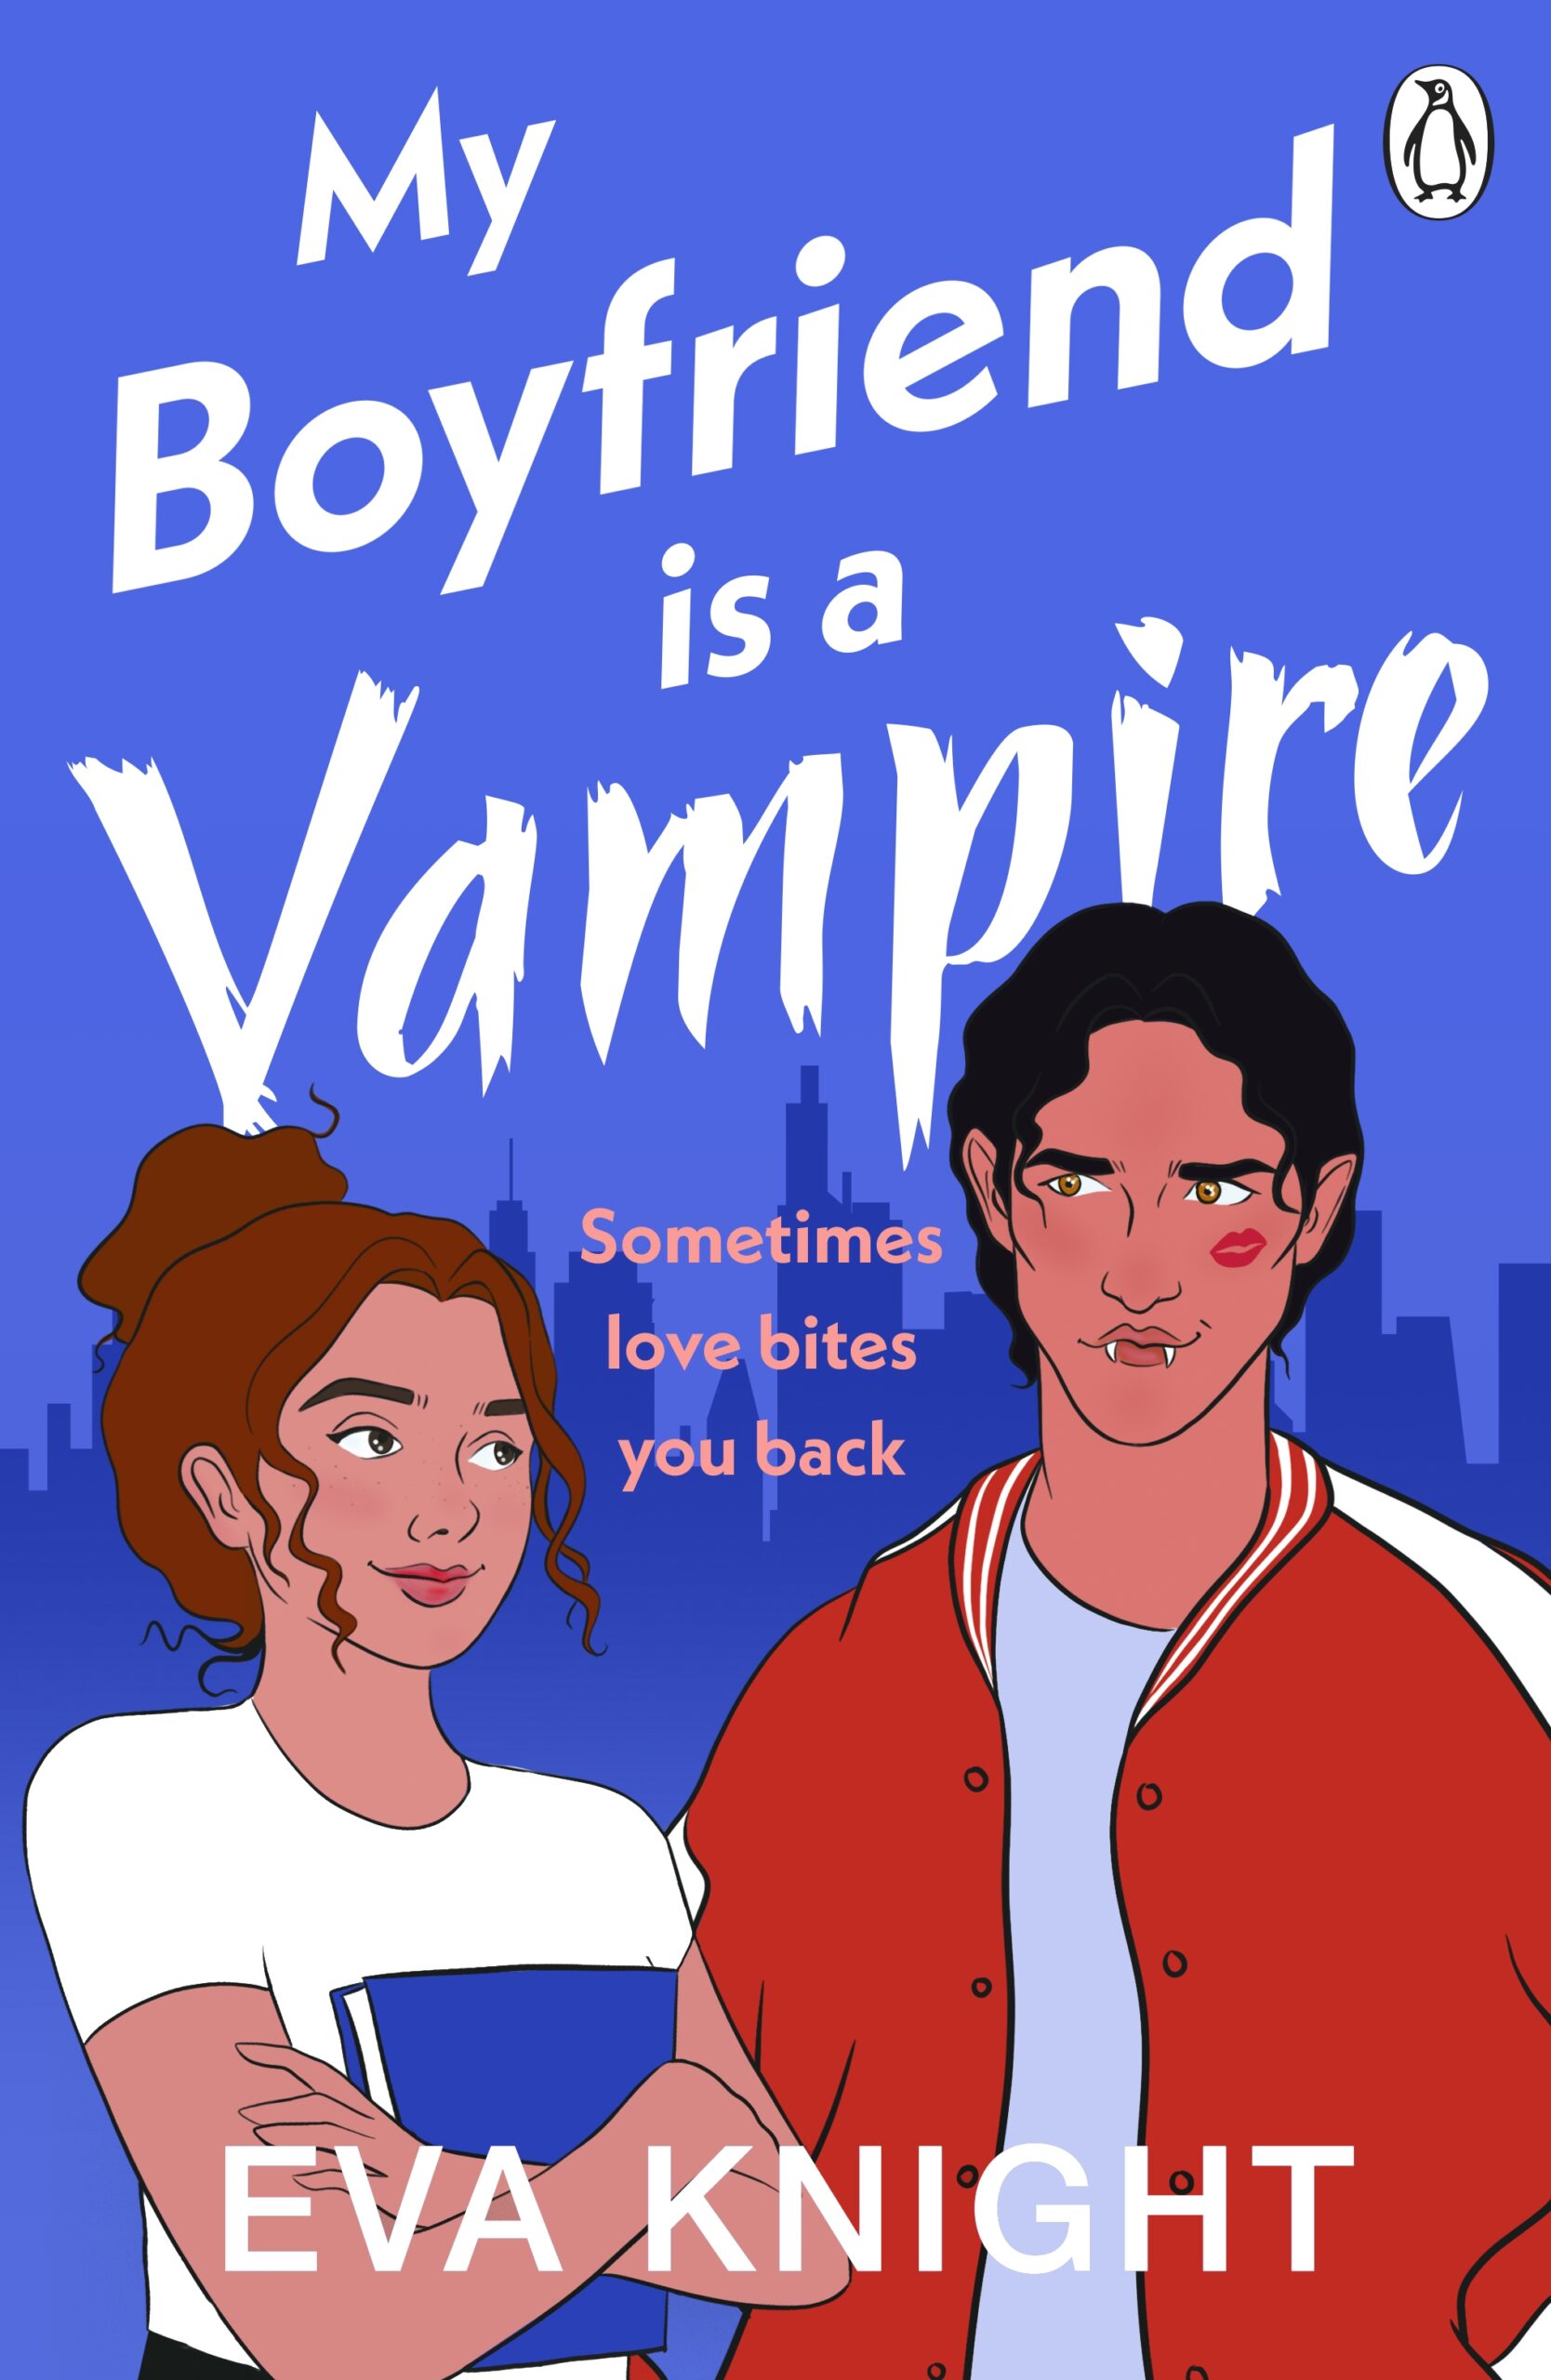 My Boyfriend is a Vampire cover